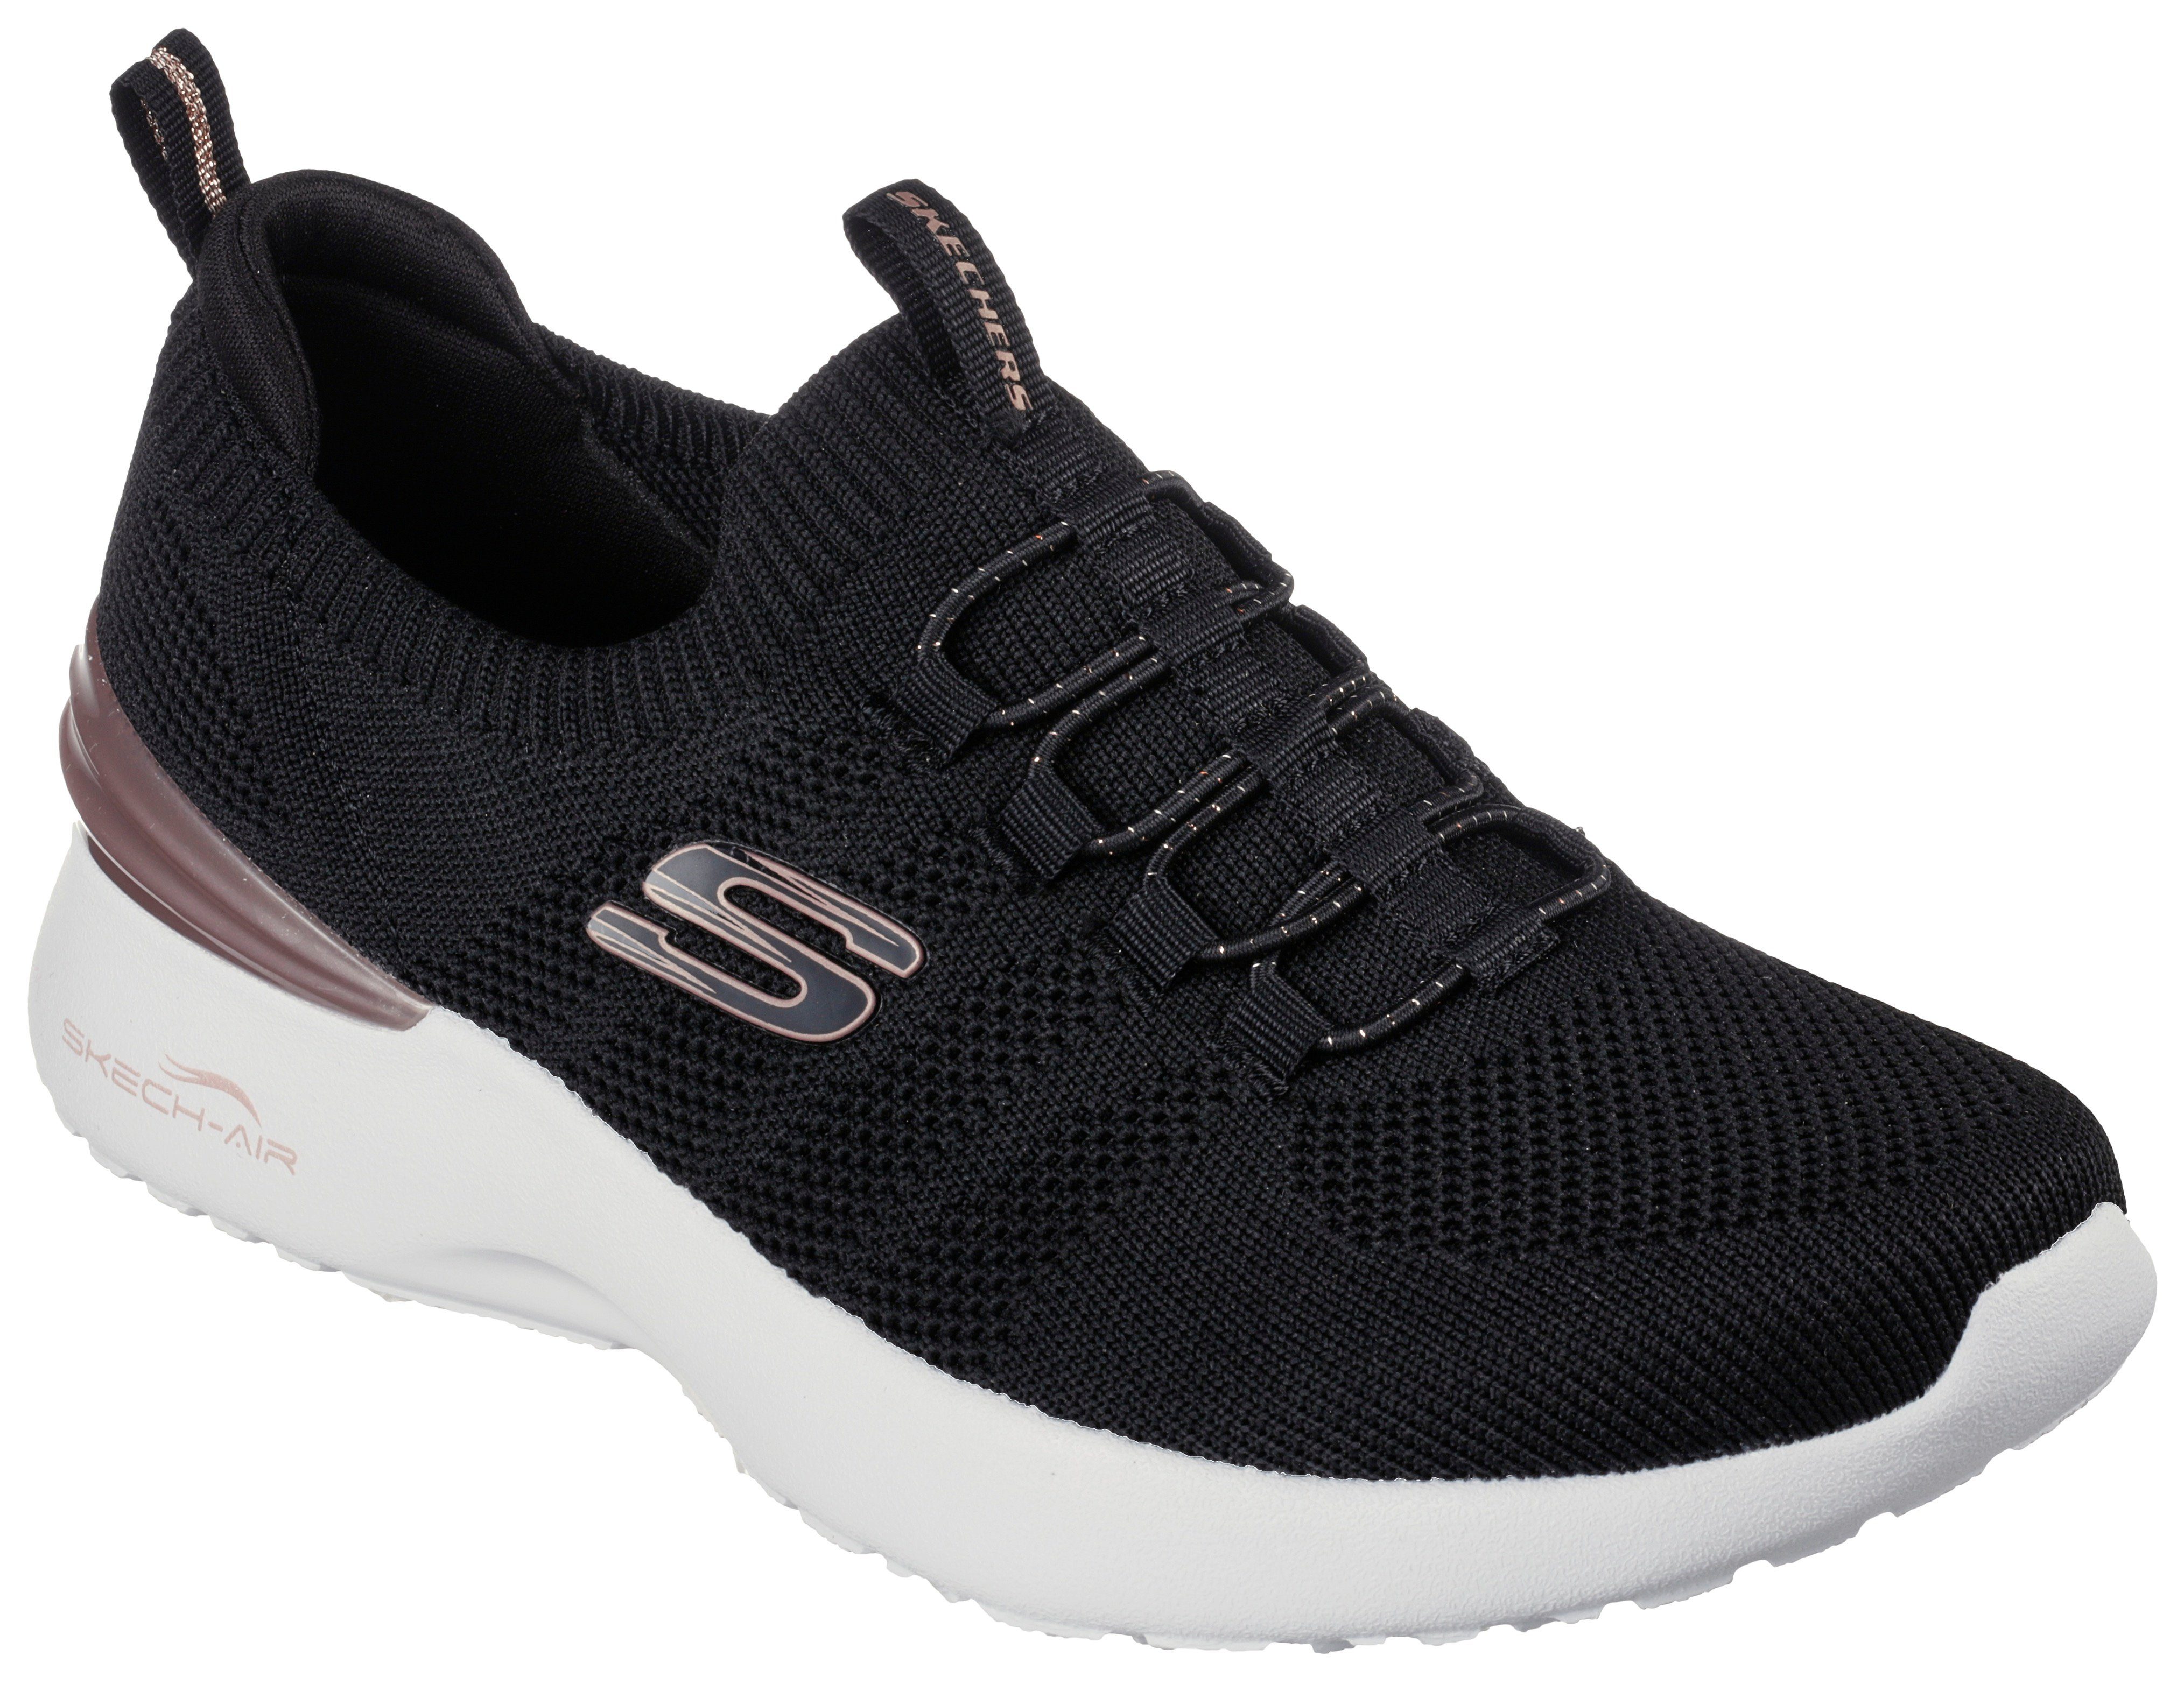 schwarz-roségoldfarben DYNAMIGHT SKECH-AIR Slip-On Gummizug mit - Sneaker Skechers